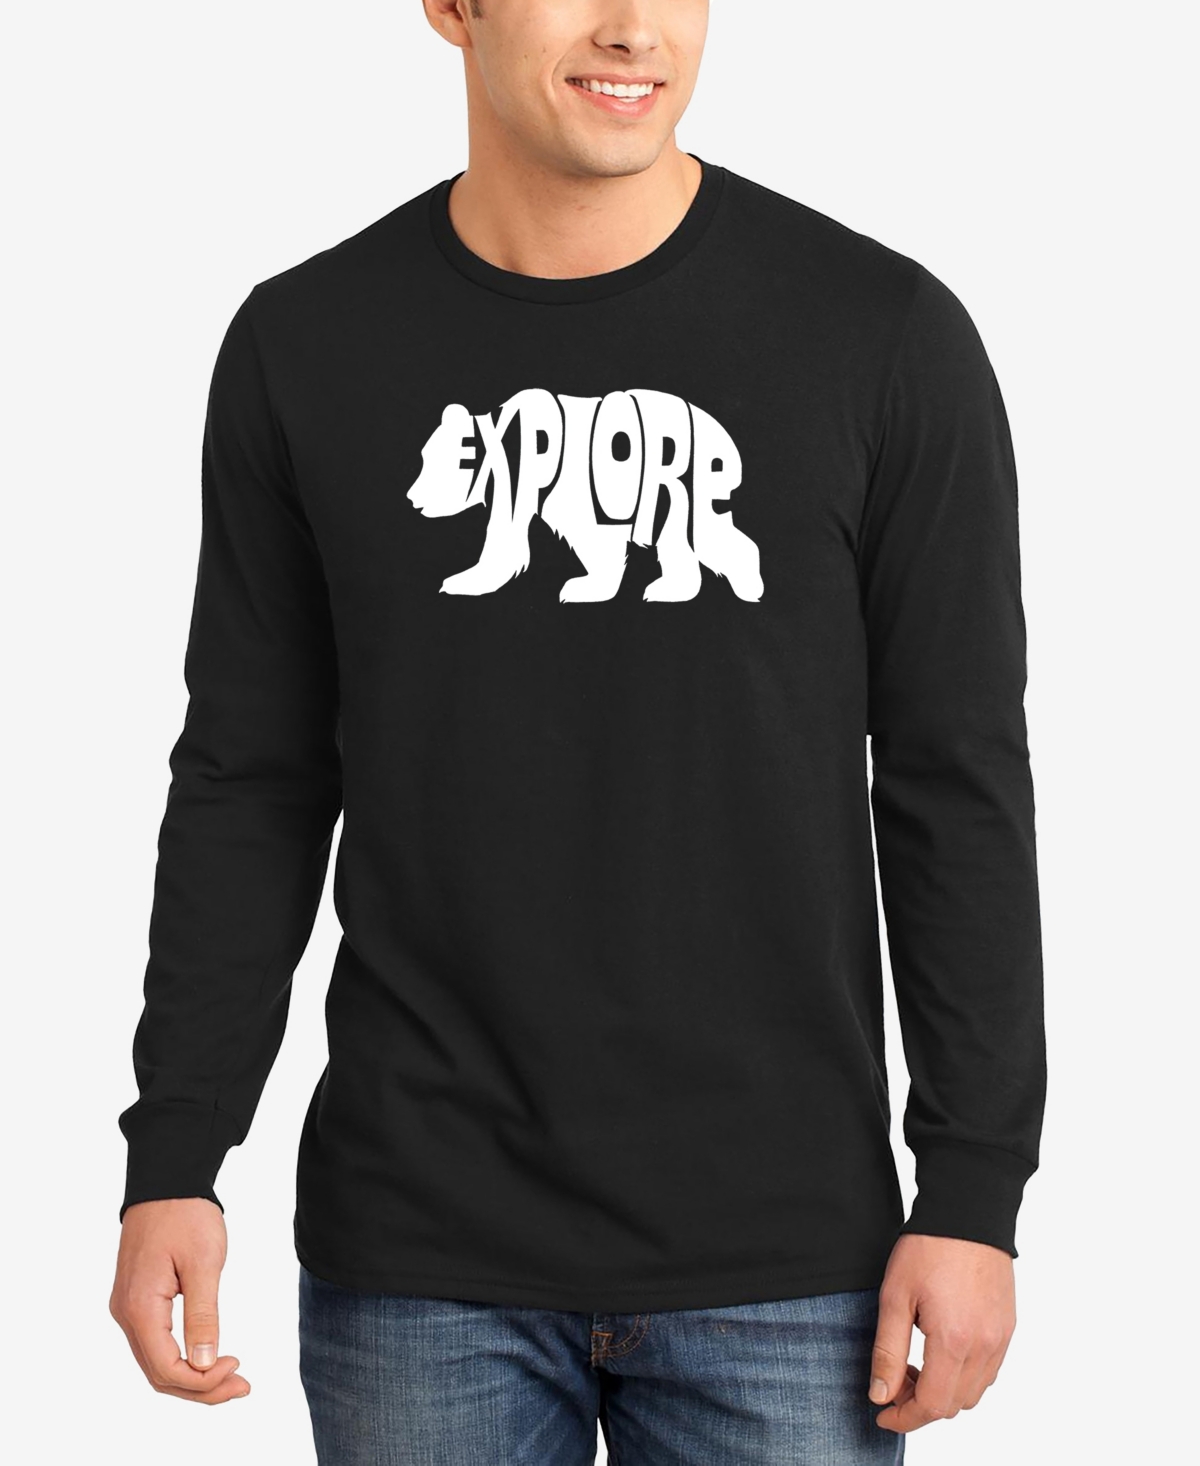 Explore - Men's Word Art Long Sleeve T-Shirt - Black